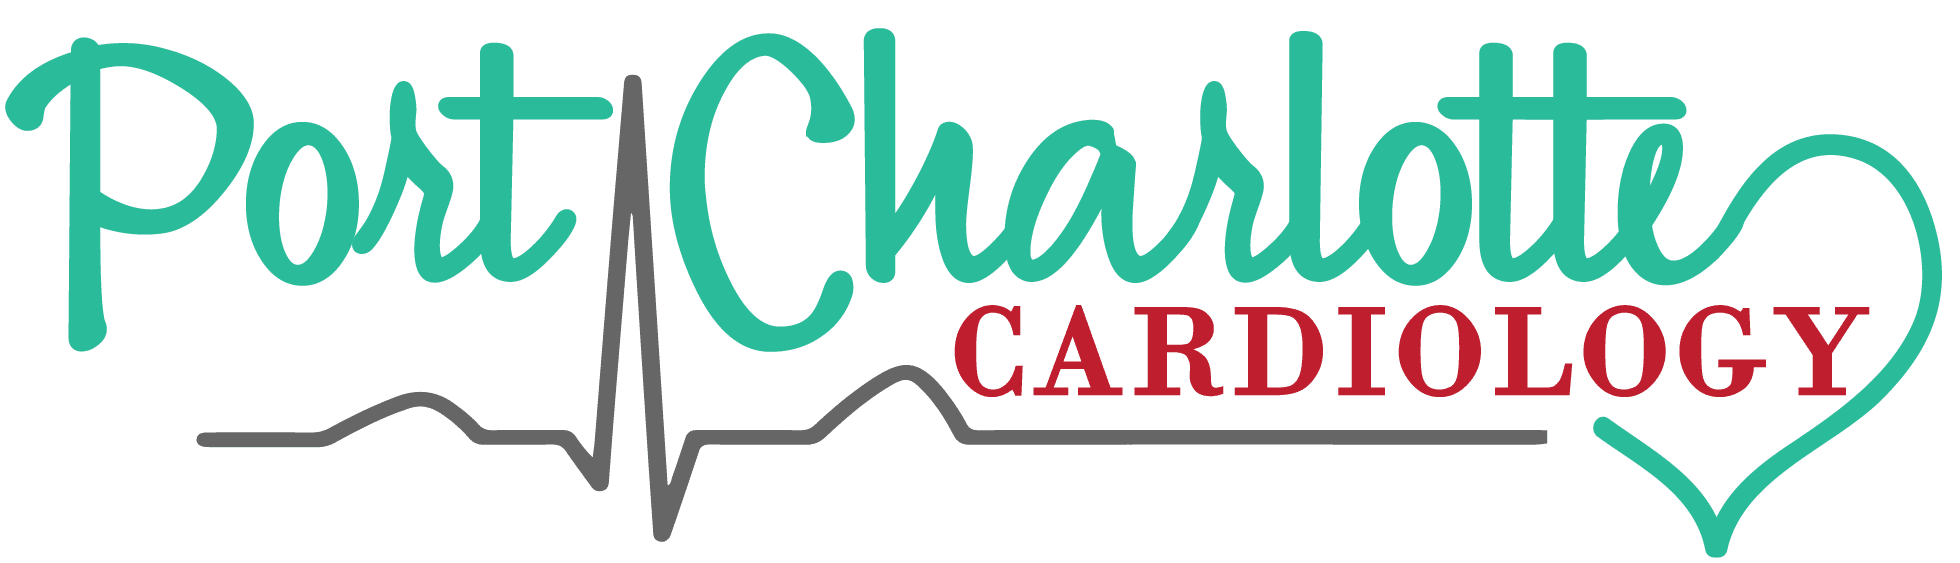 Port Charlotte Cardiology